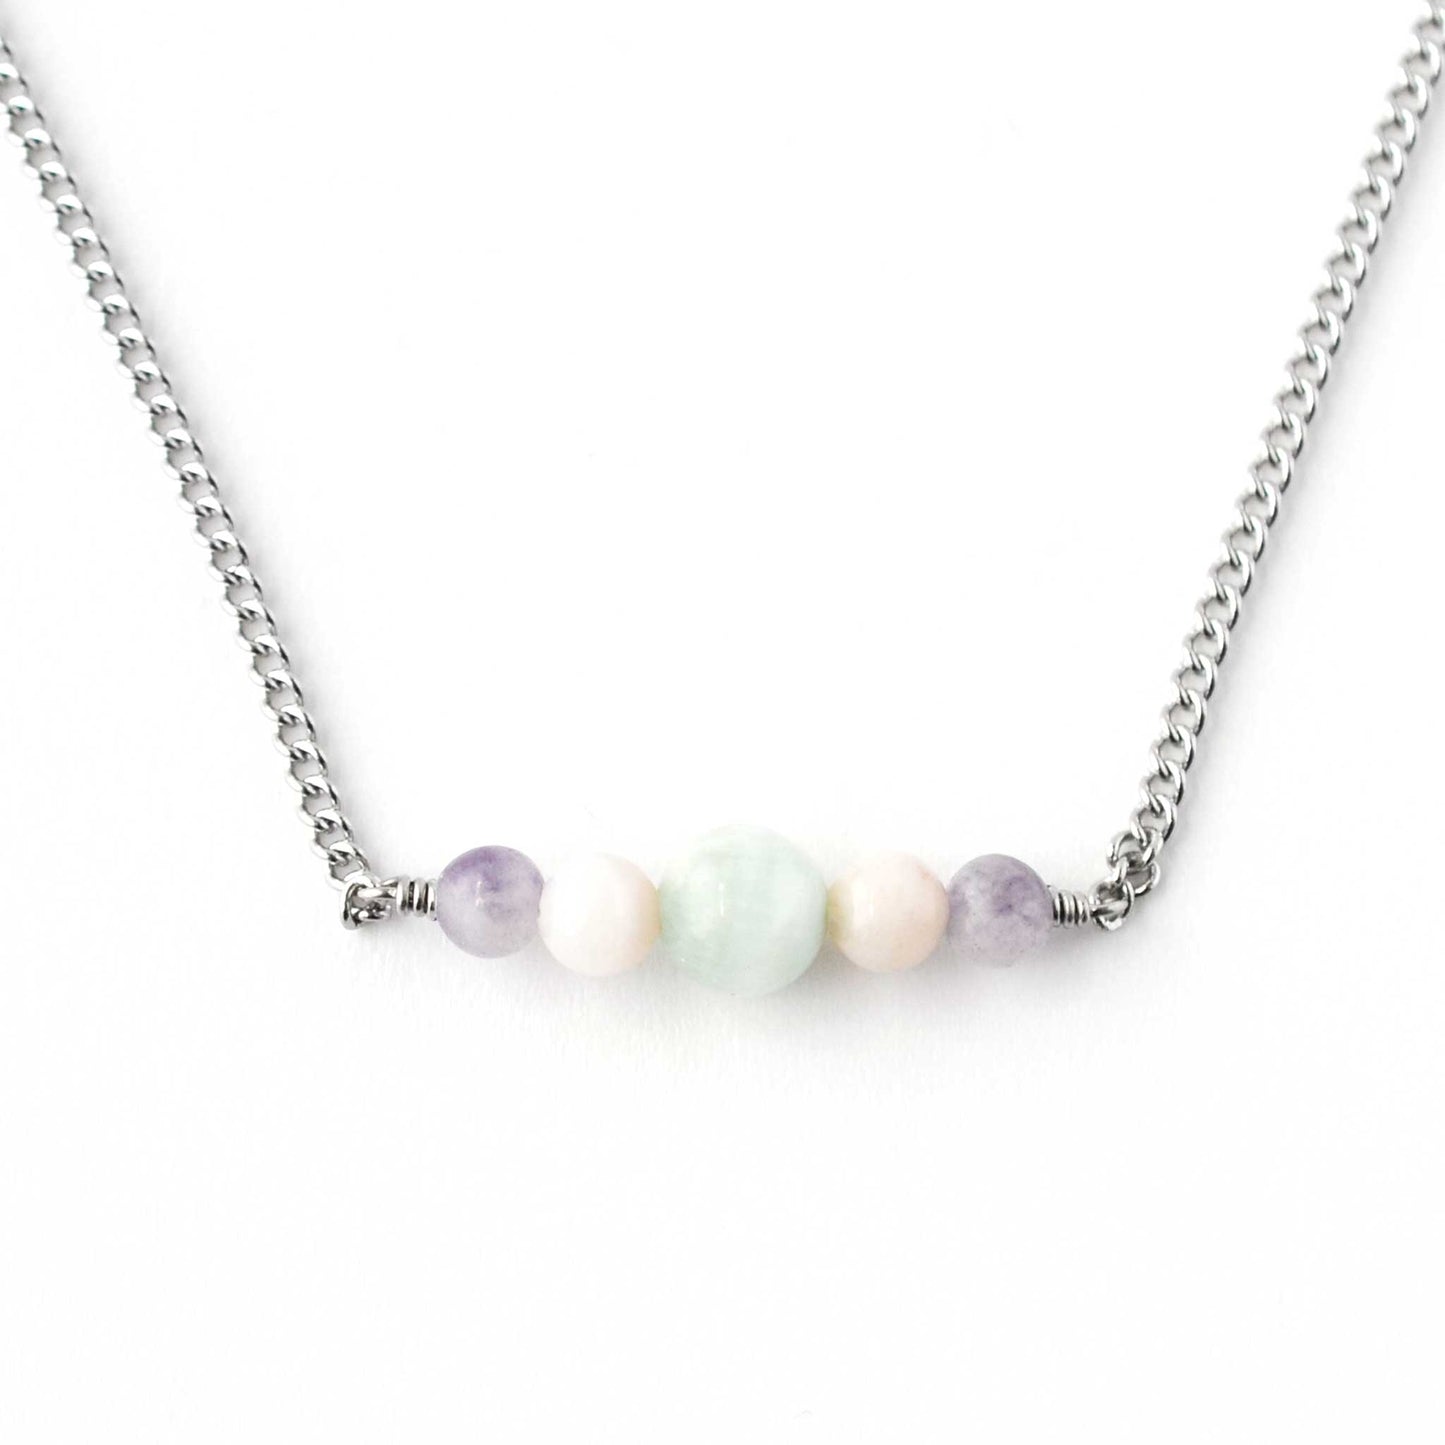 Pastel gemstone bar necklace on hypoallergenic stainless steel chain